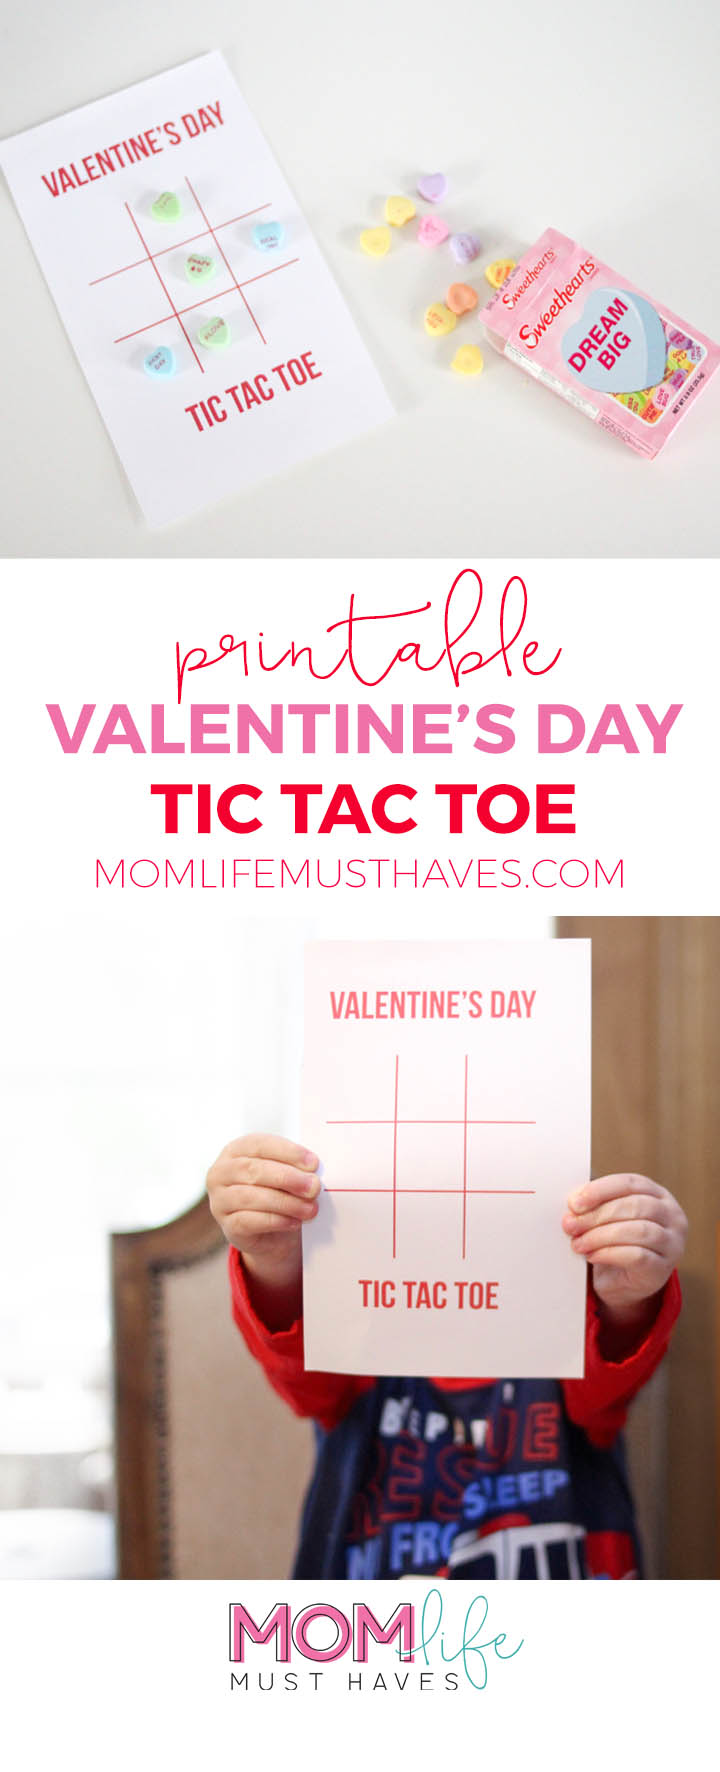 Valentine's Day tic tac toe download + print game @ momlifemusthaves.com